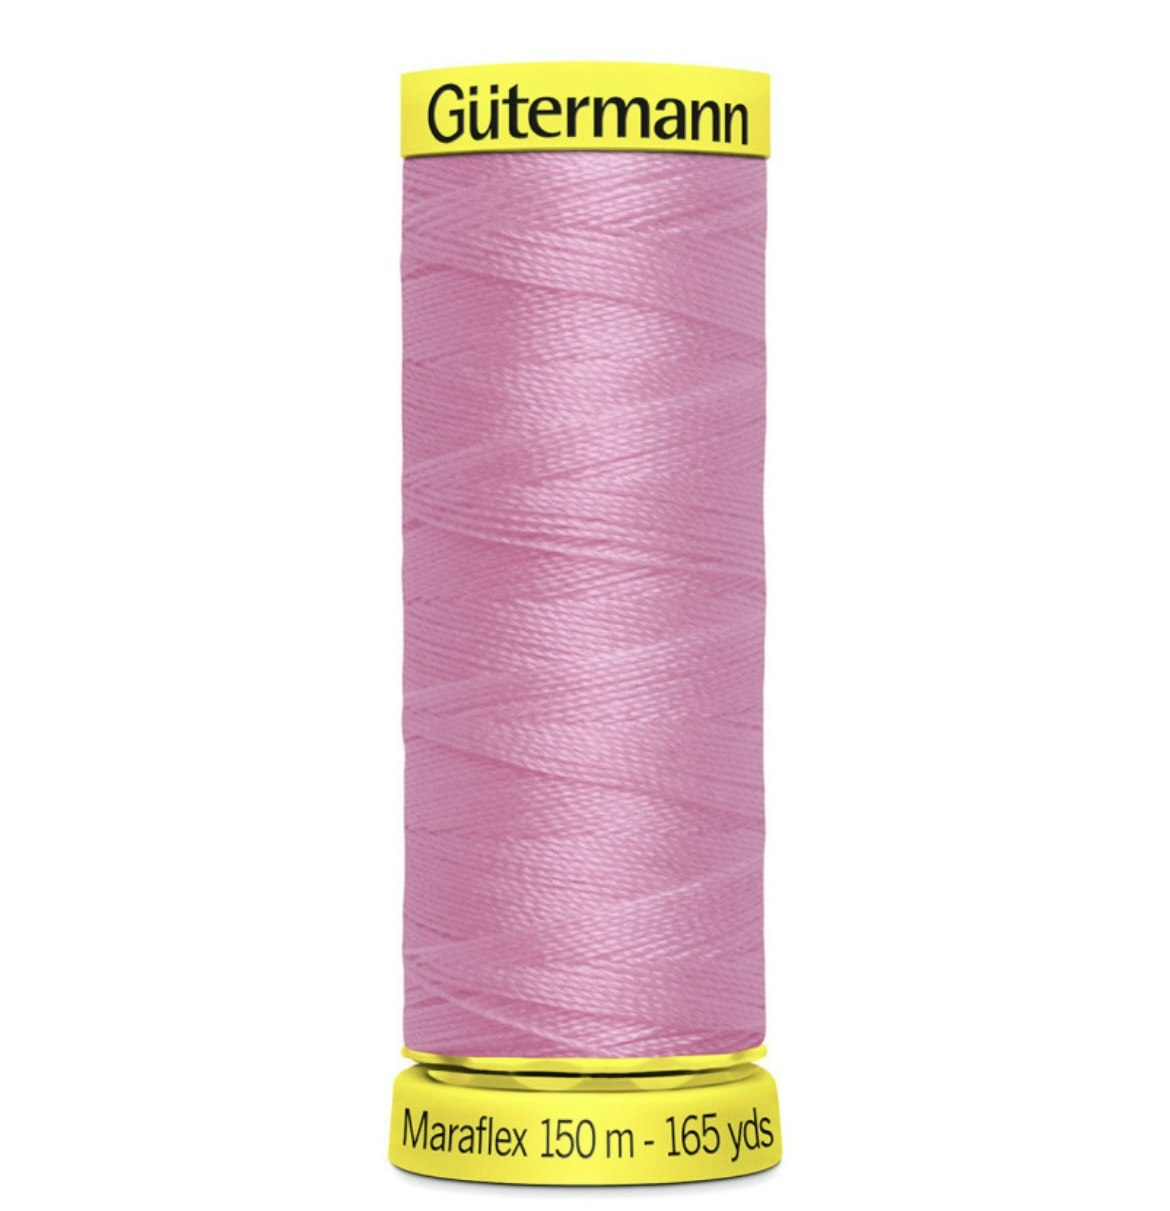 Gütermann maraflex tråd sterk rosa 663